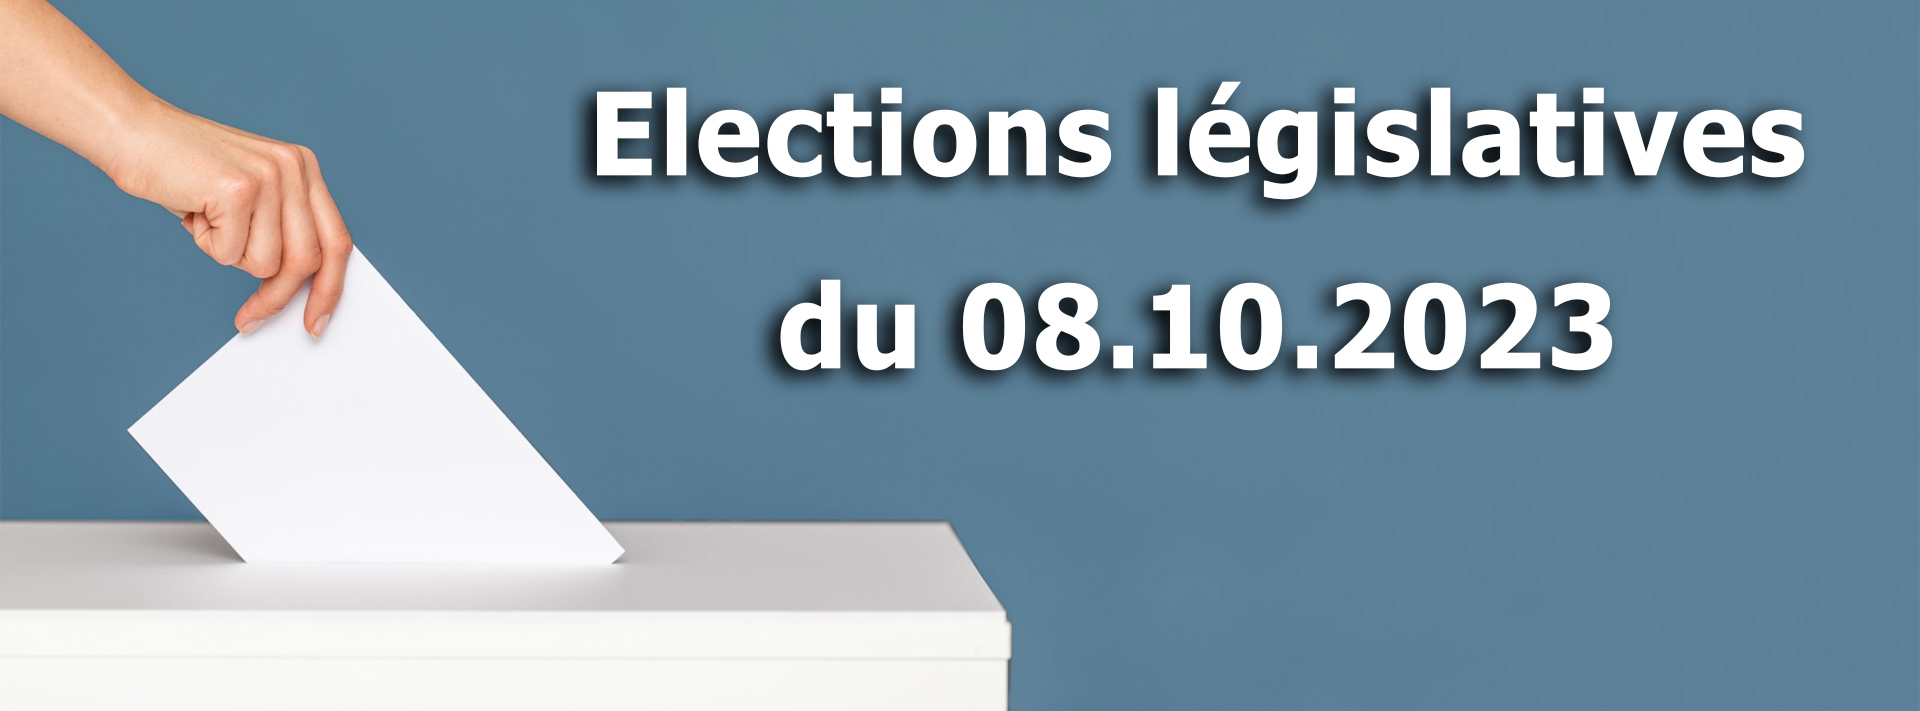 Elections légisaltives 2023